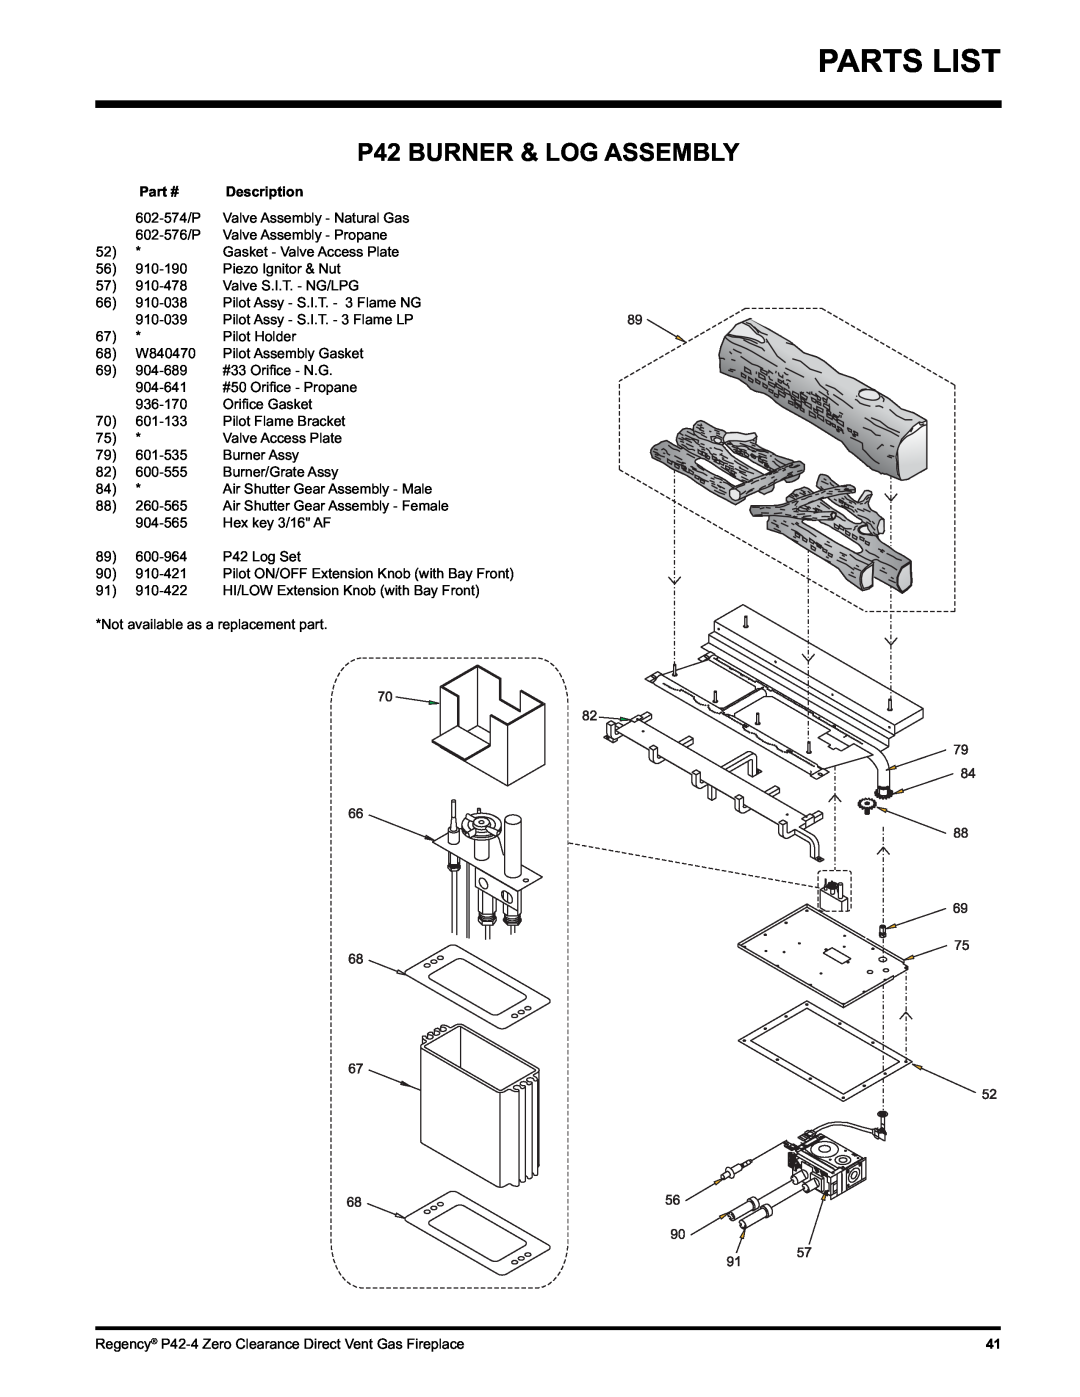 Regency P42-LP4, P42-NG4 installation manual P42 BURNER & LOG ASSEMBLY, Description 